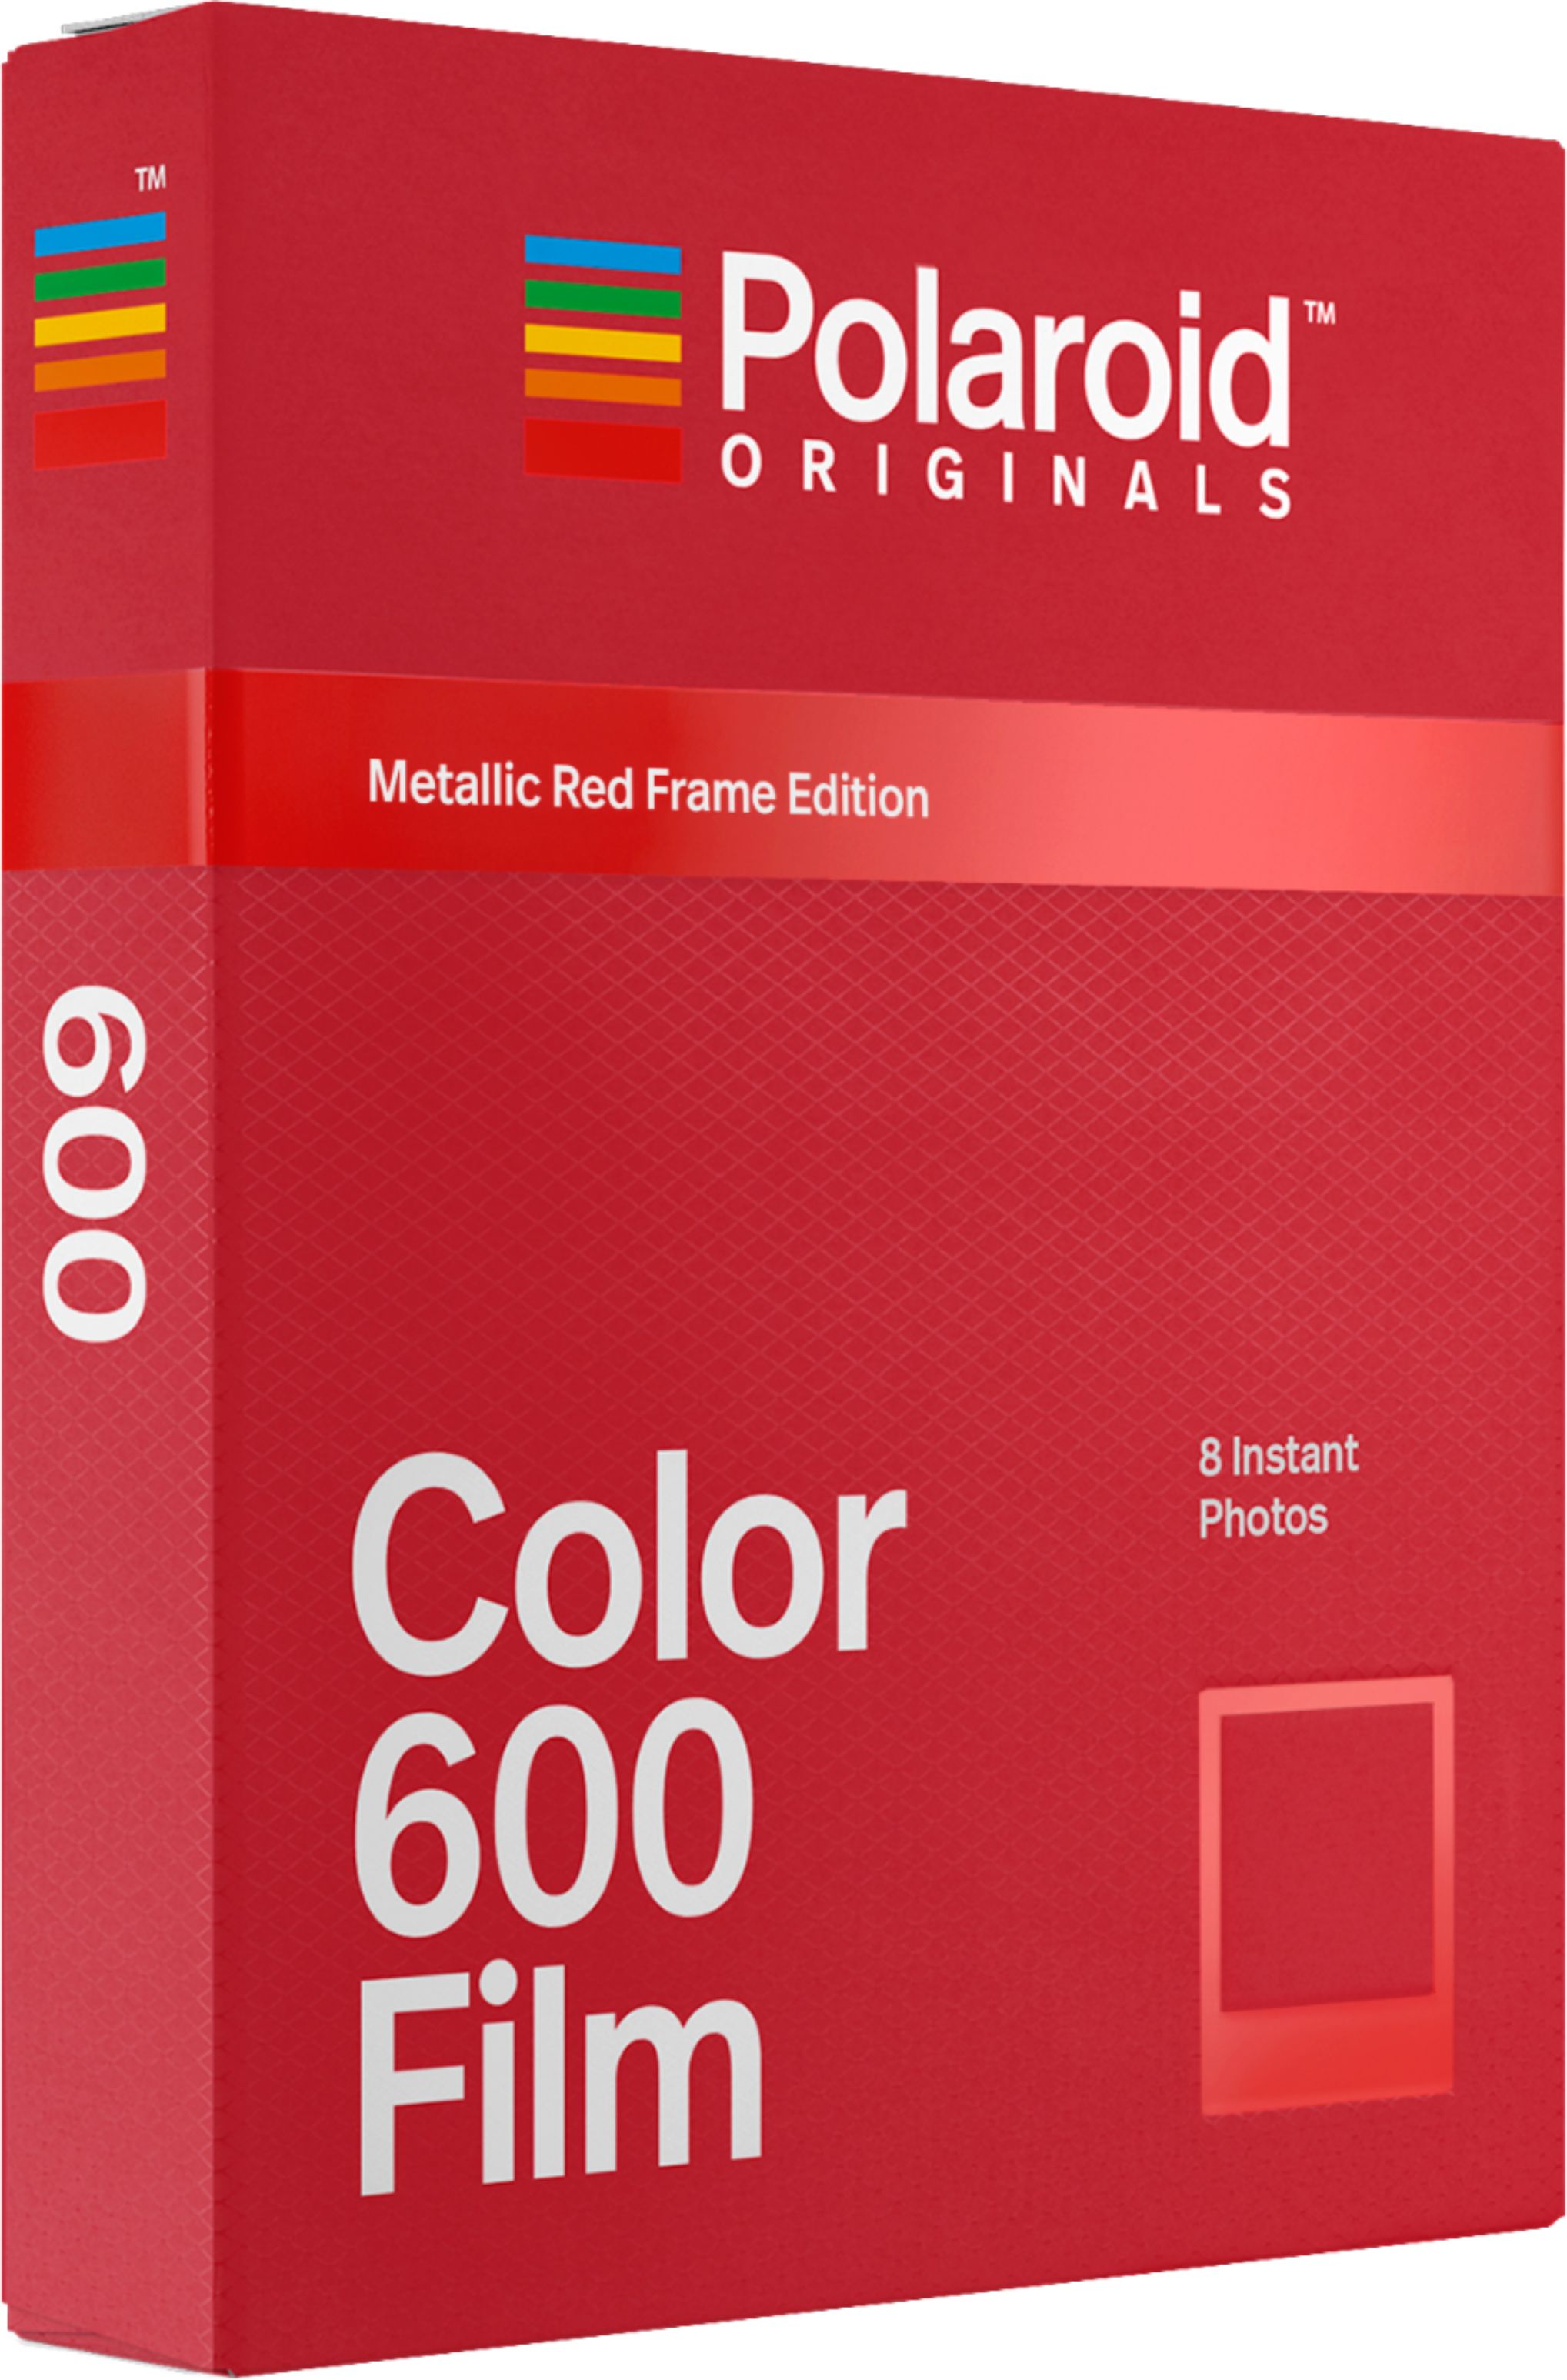 Verdikken Belichamen Kinderpaleis Polaroid Color 600 Film Metallic Red Frame 4858 - Best Buy